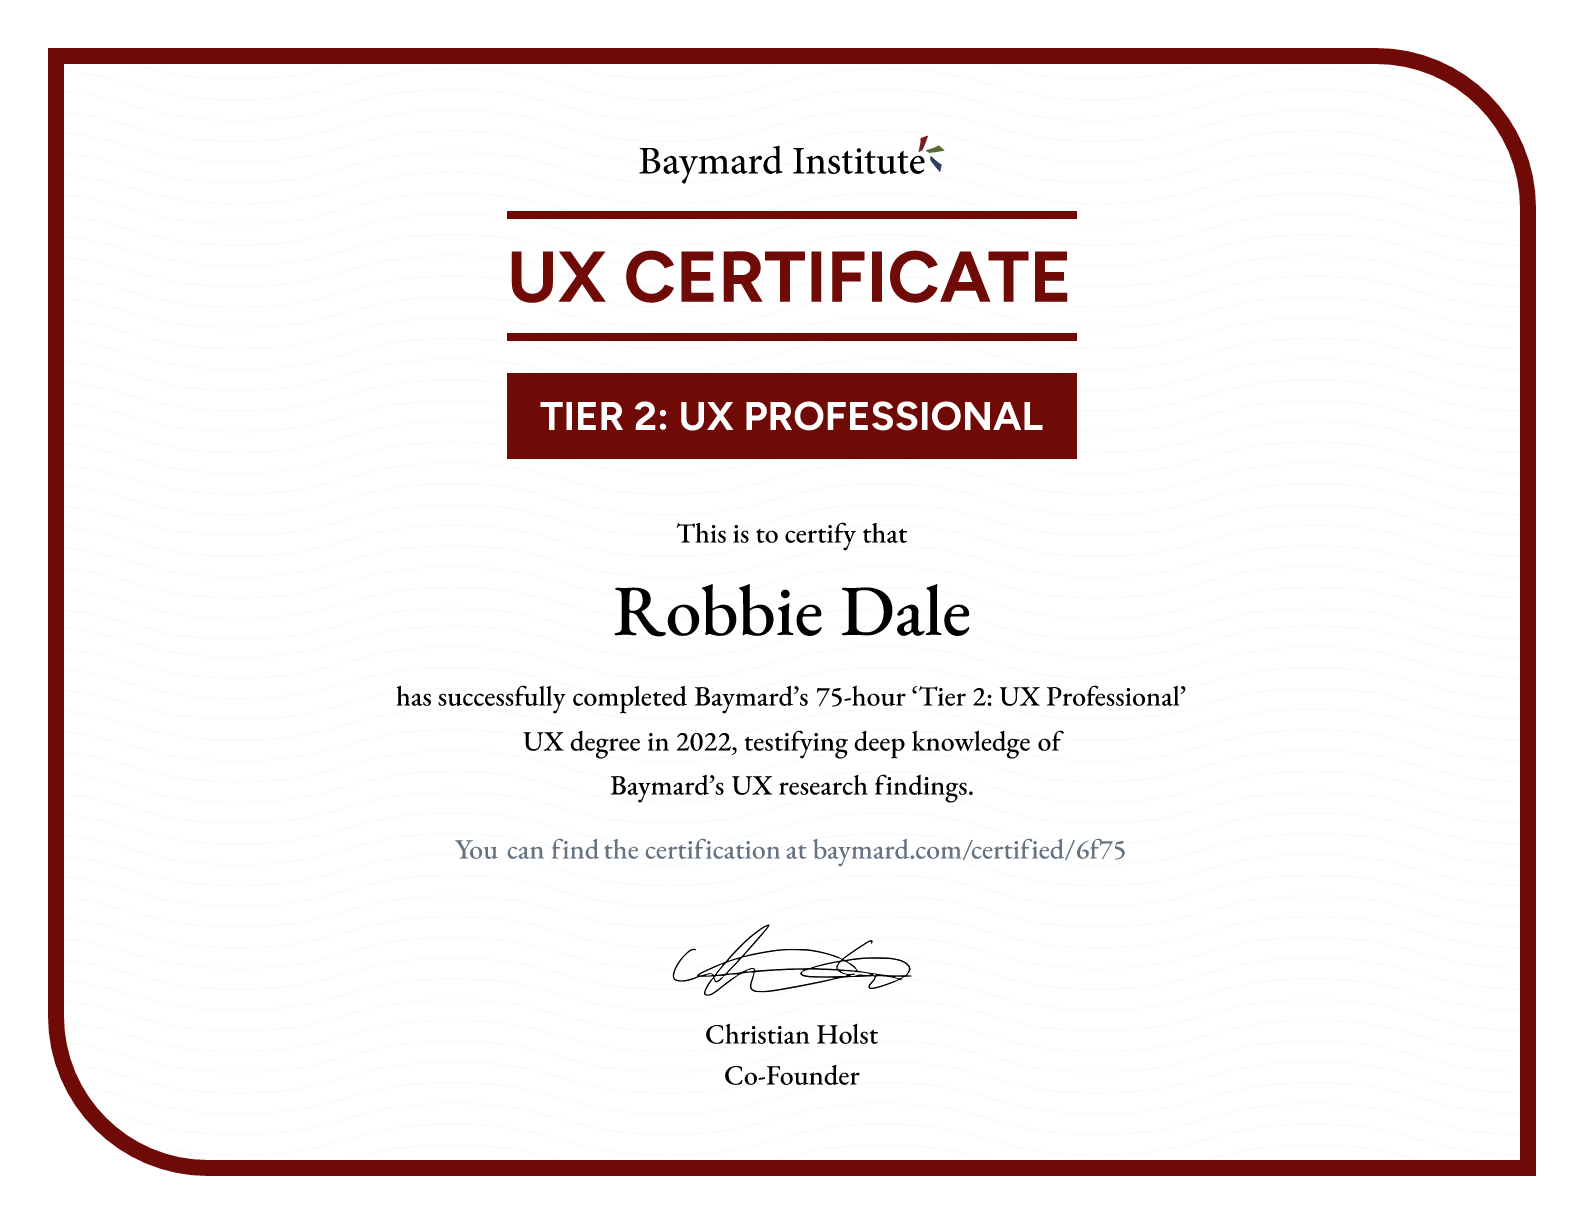 Robbie Dale’s certificate